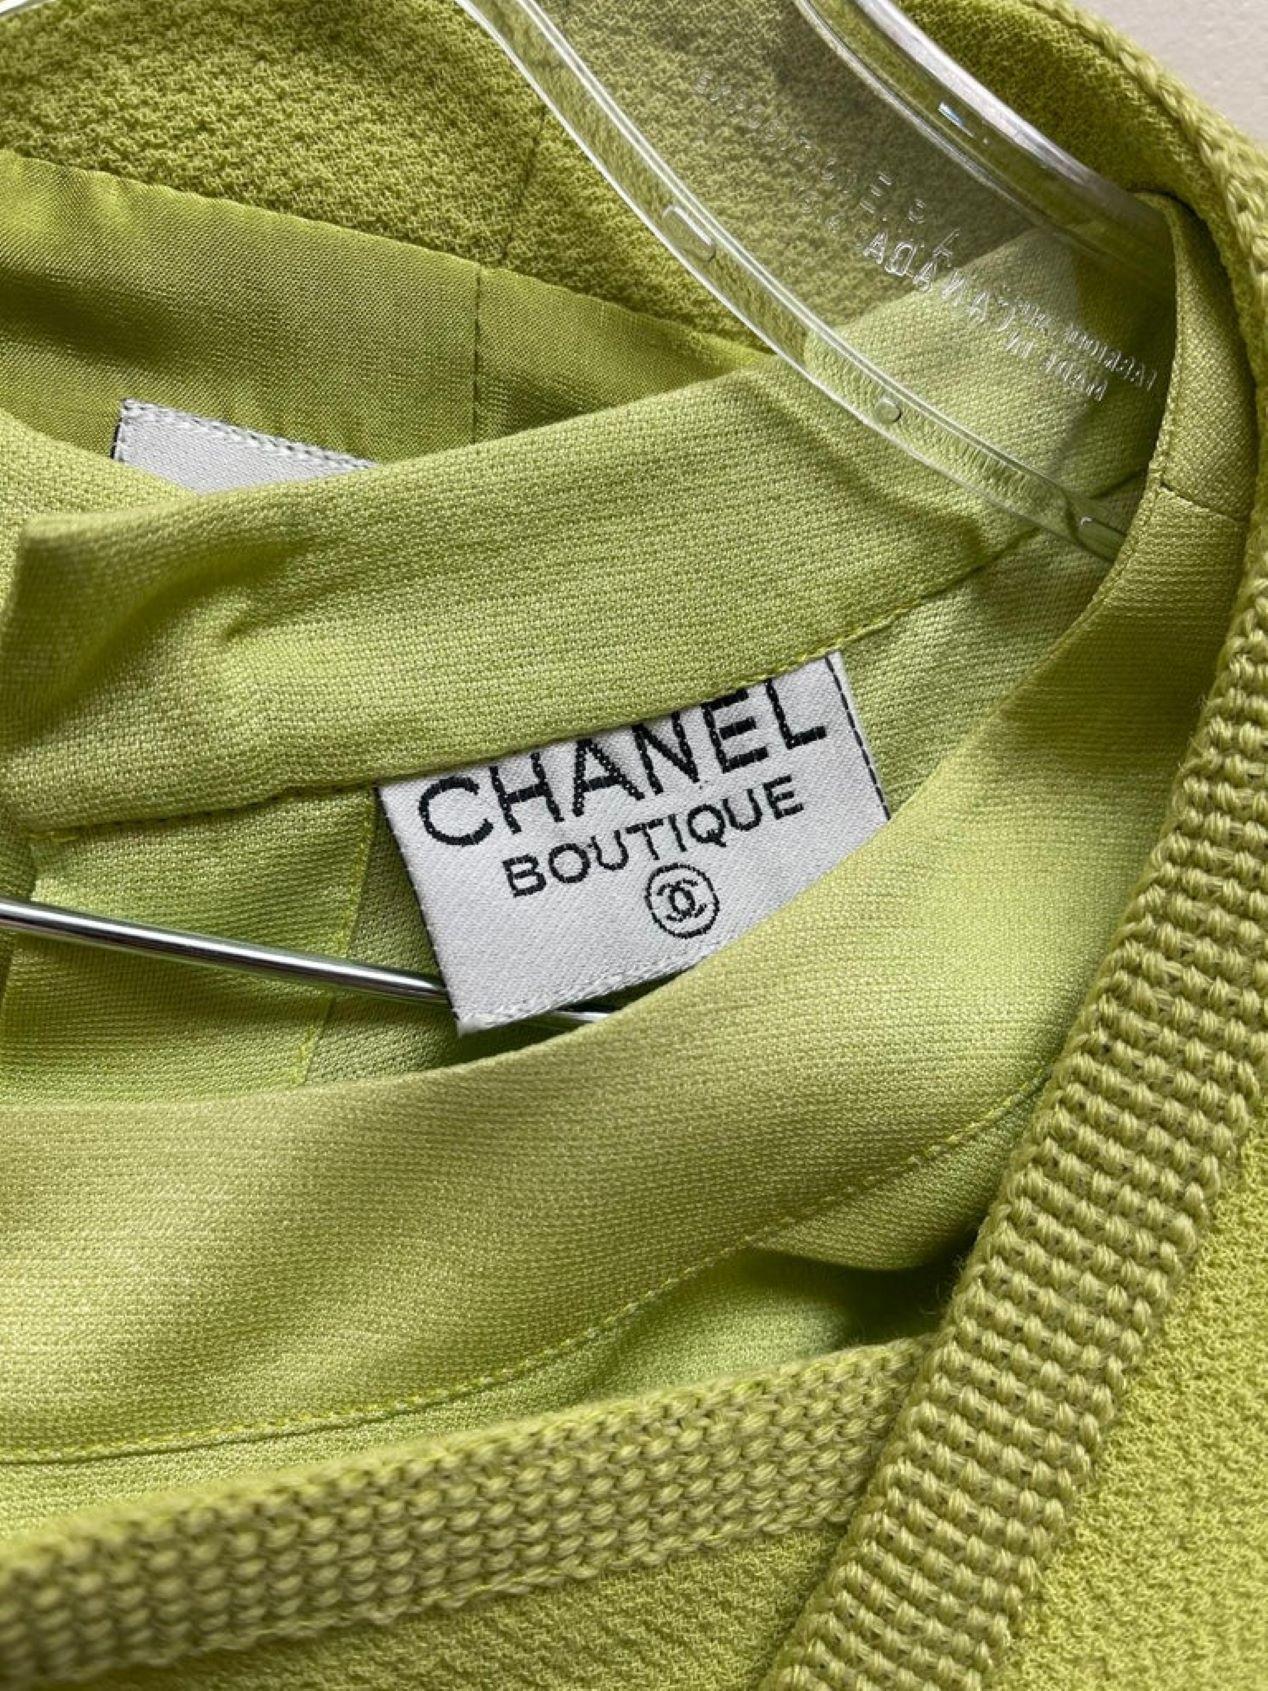 CHANEL BOUTIQUE Chartreuse Green Suit Signature Chanel 11